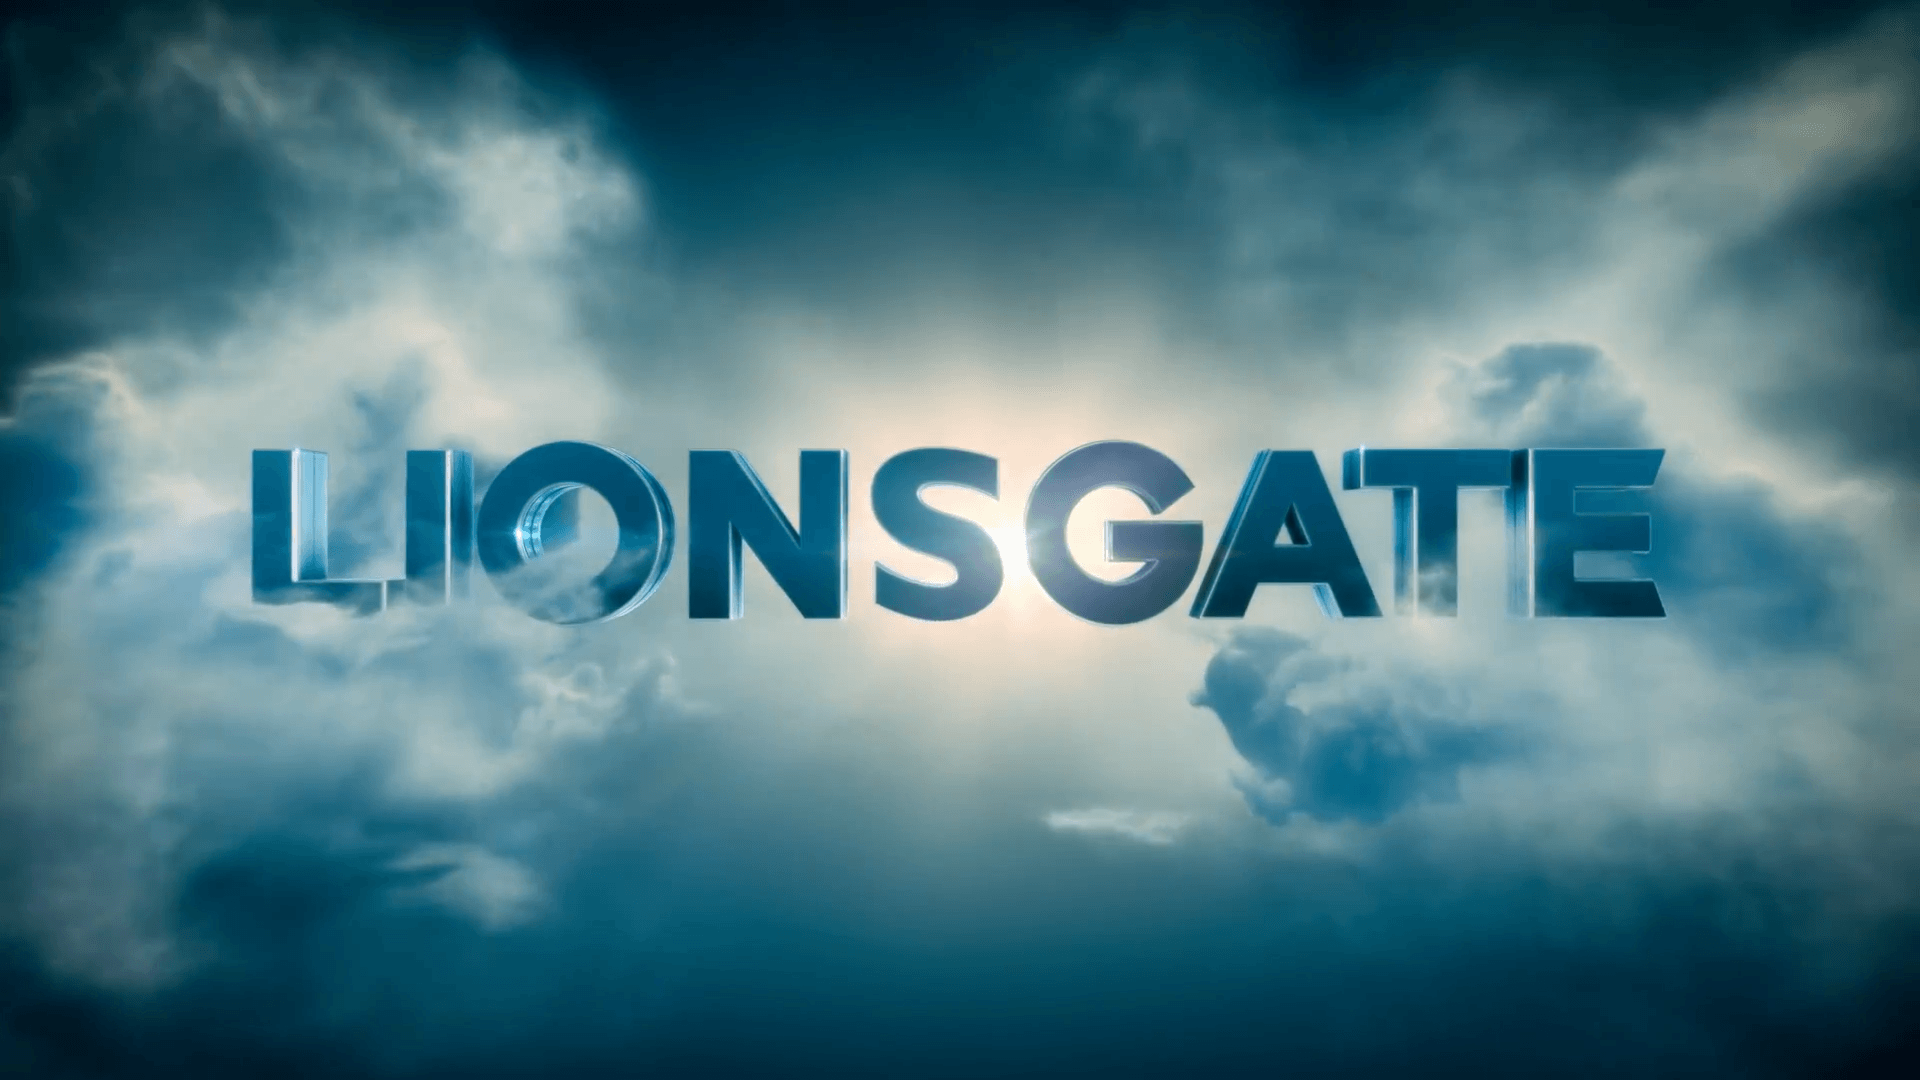 Lionsgate Logo - Image - Lionsgate 2013.png | Logopedia | FANDOM powered by Wikia